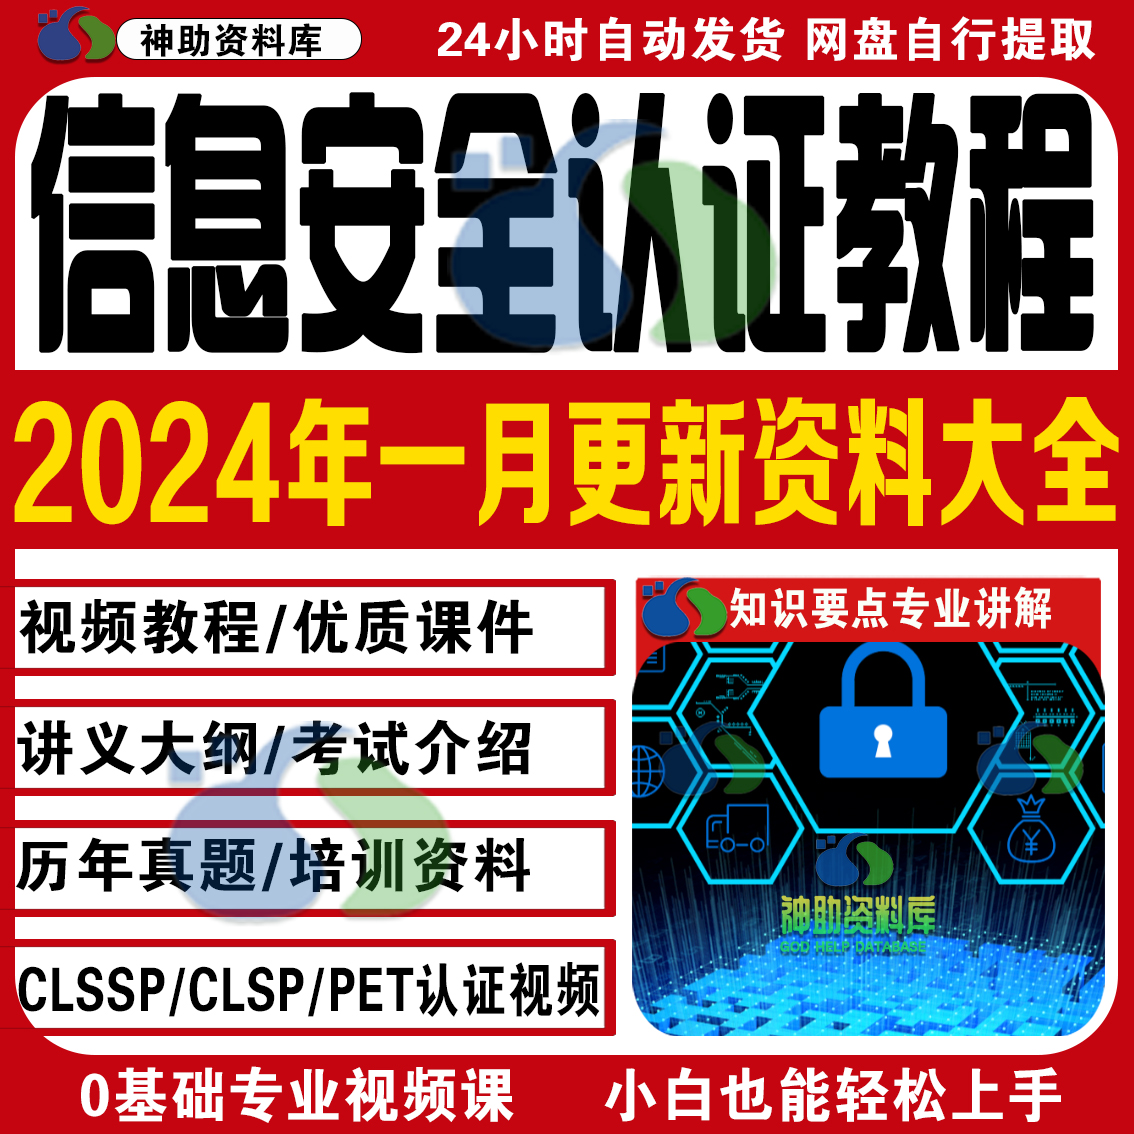 CISSP CISP教程2023信息安全认证视频培训课考试题库资料CISP-PTE